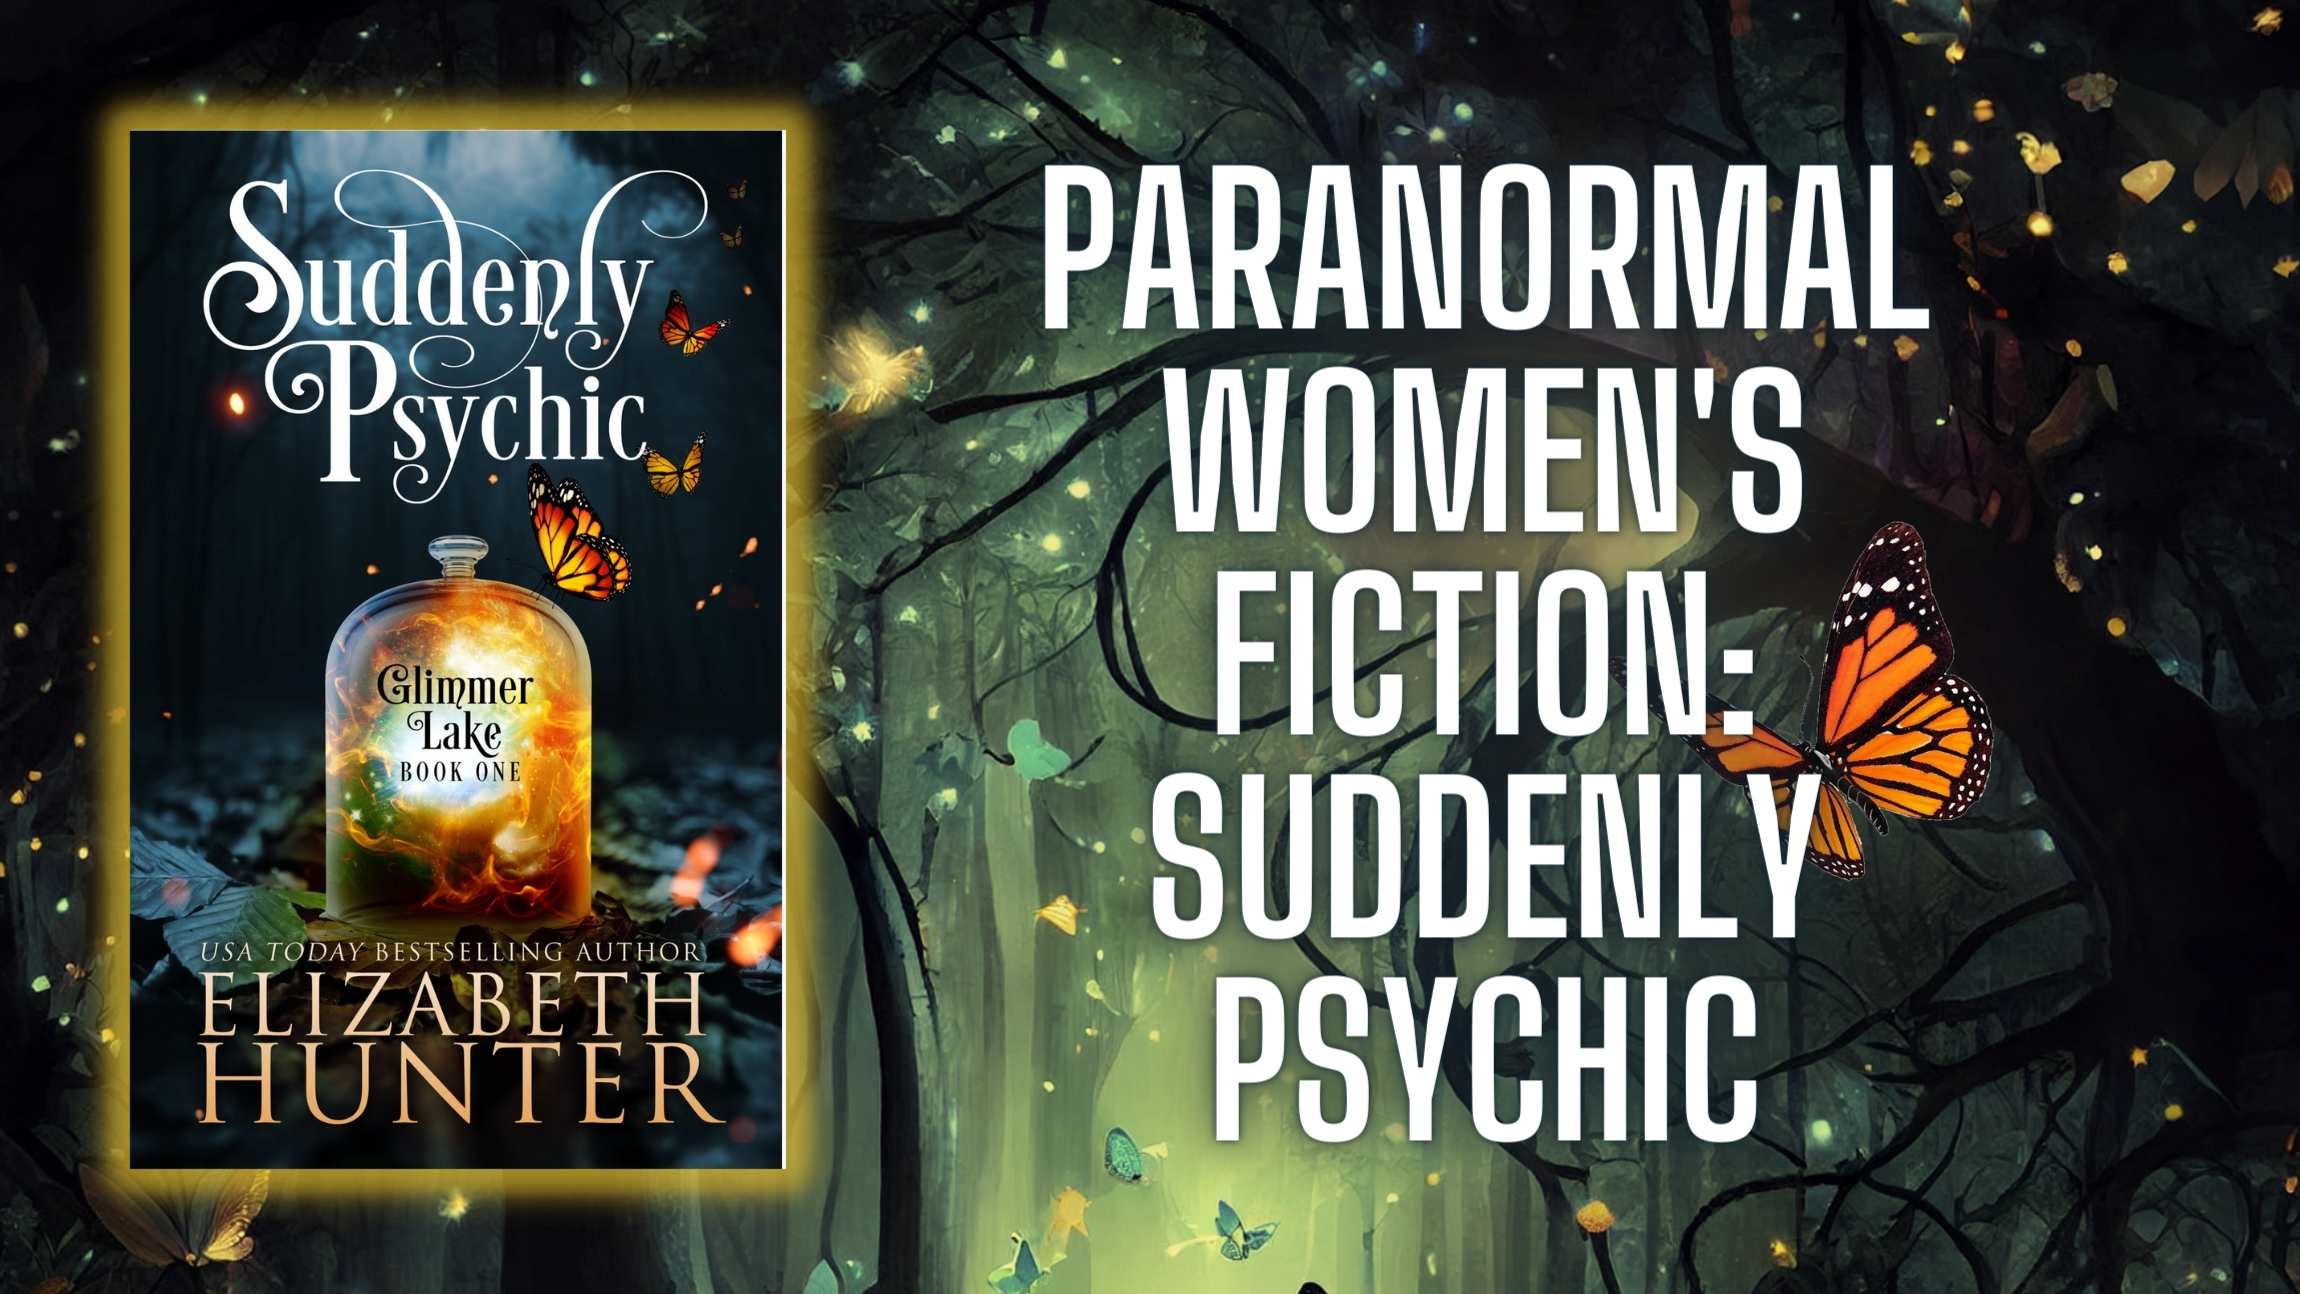 Suddenly Psychic A Paranormal Women's Fiction Novel